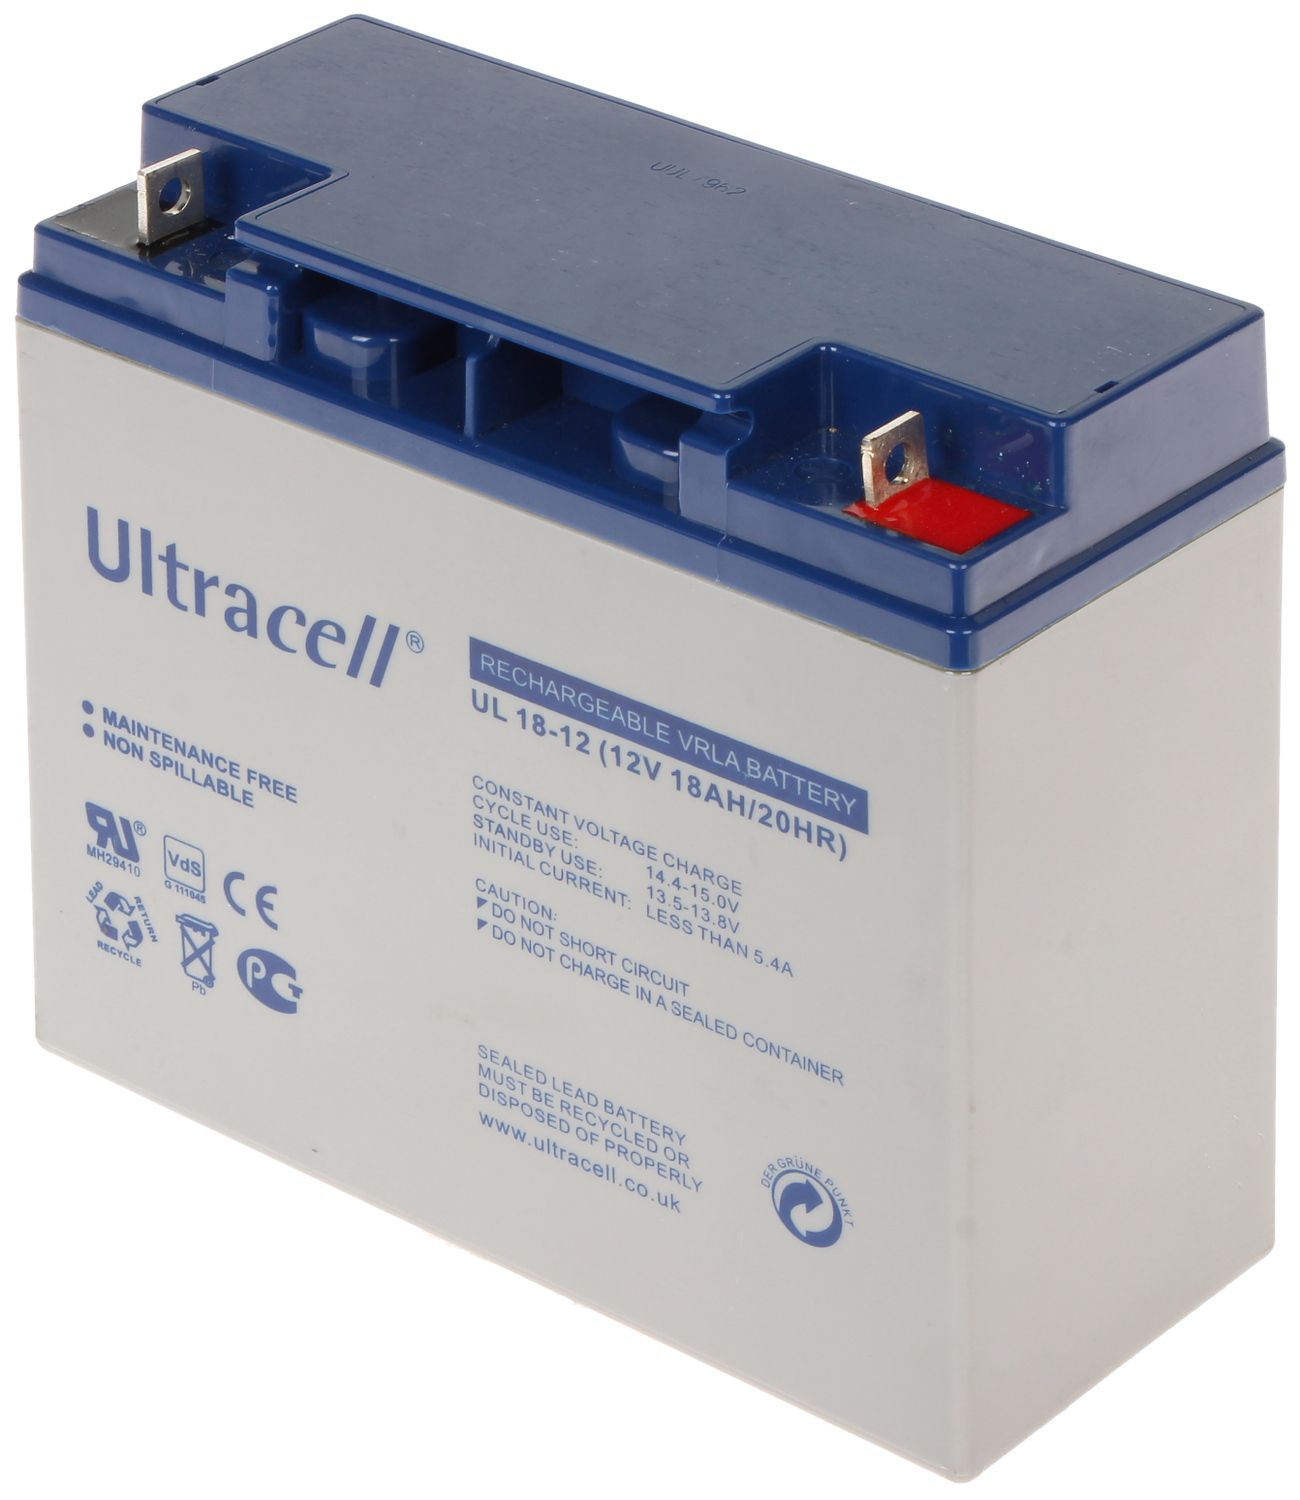 BATTERY 12V/18AH-UL ULTRACELL - Battery Capacity over 9Ah - Delta